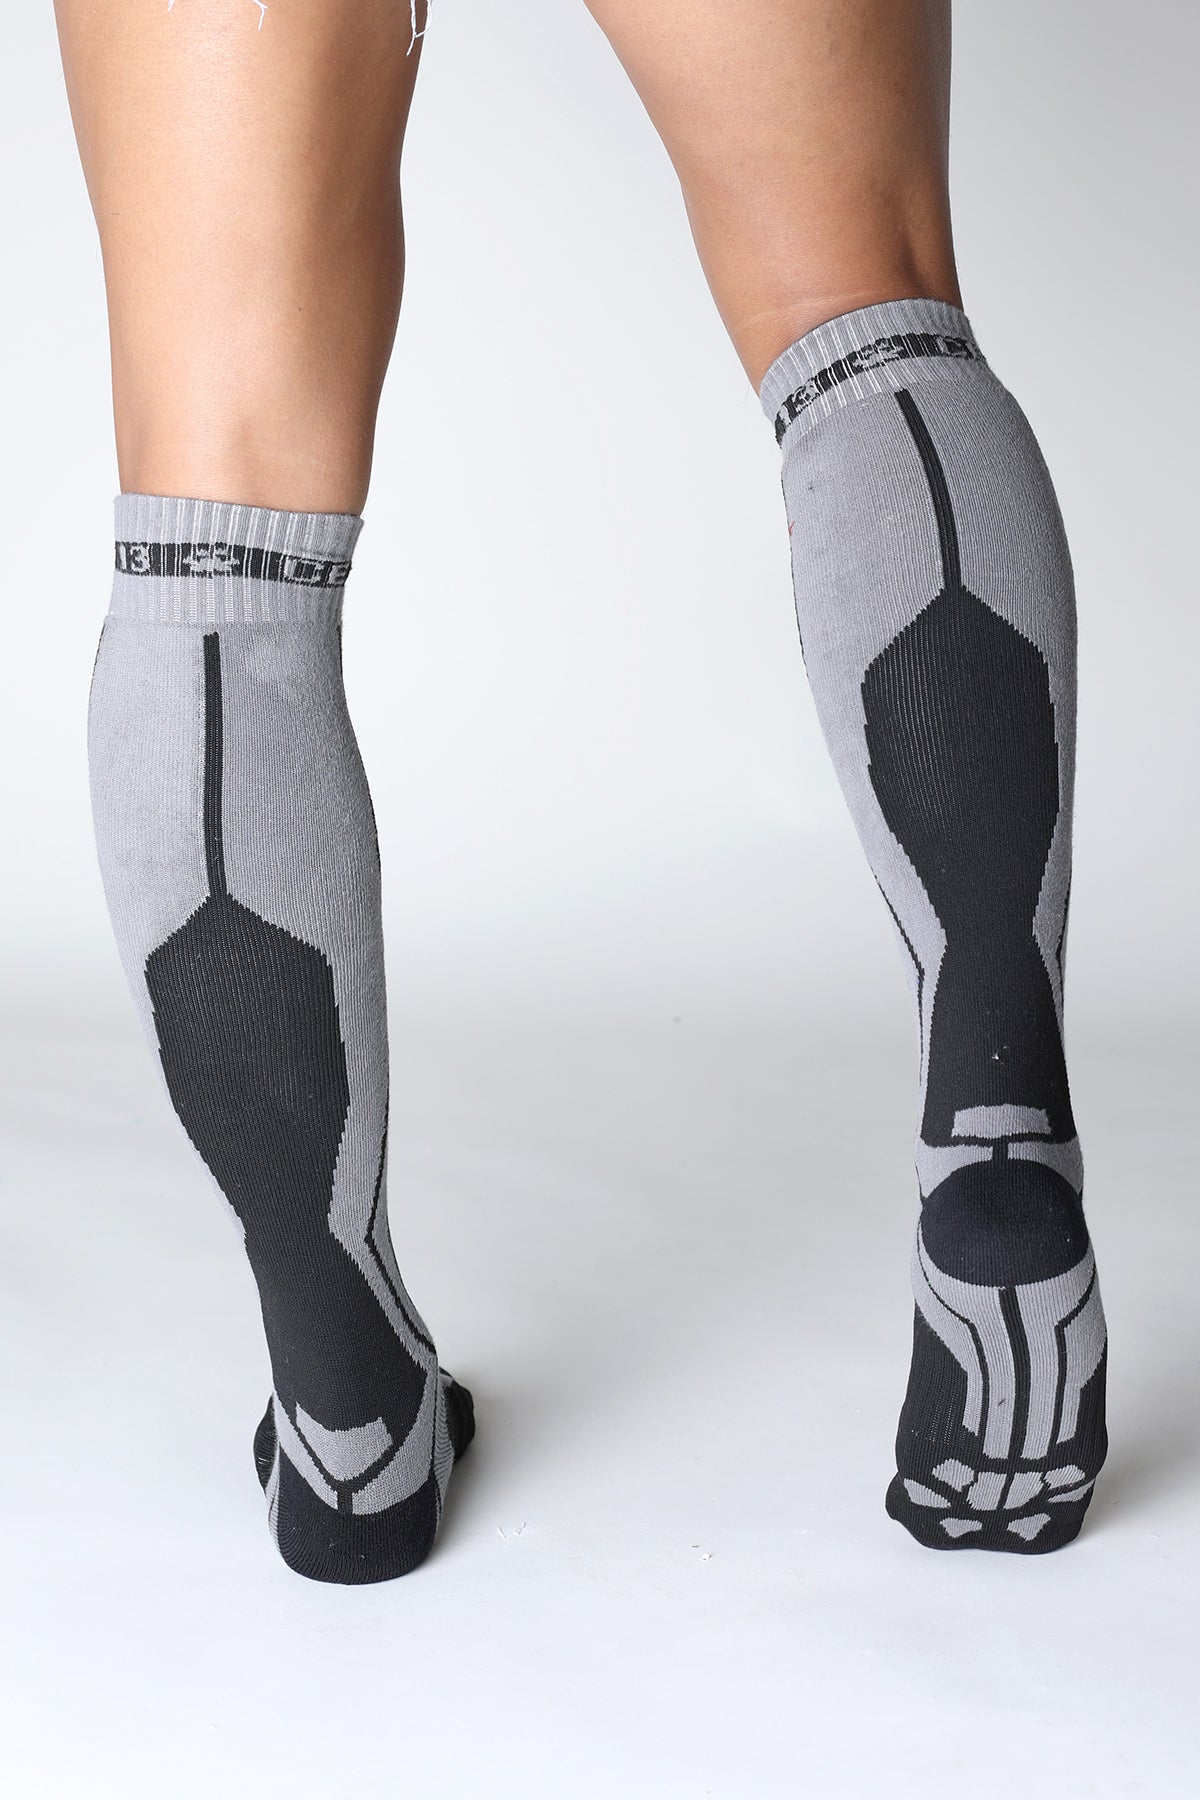 Buy Bad Boy Grappling Socks-X-Lar (Size 10/11) -- Online at